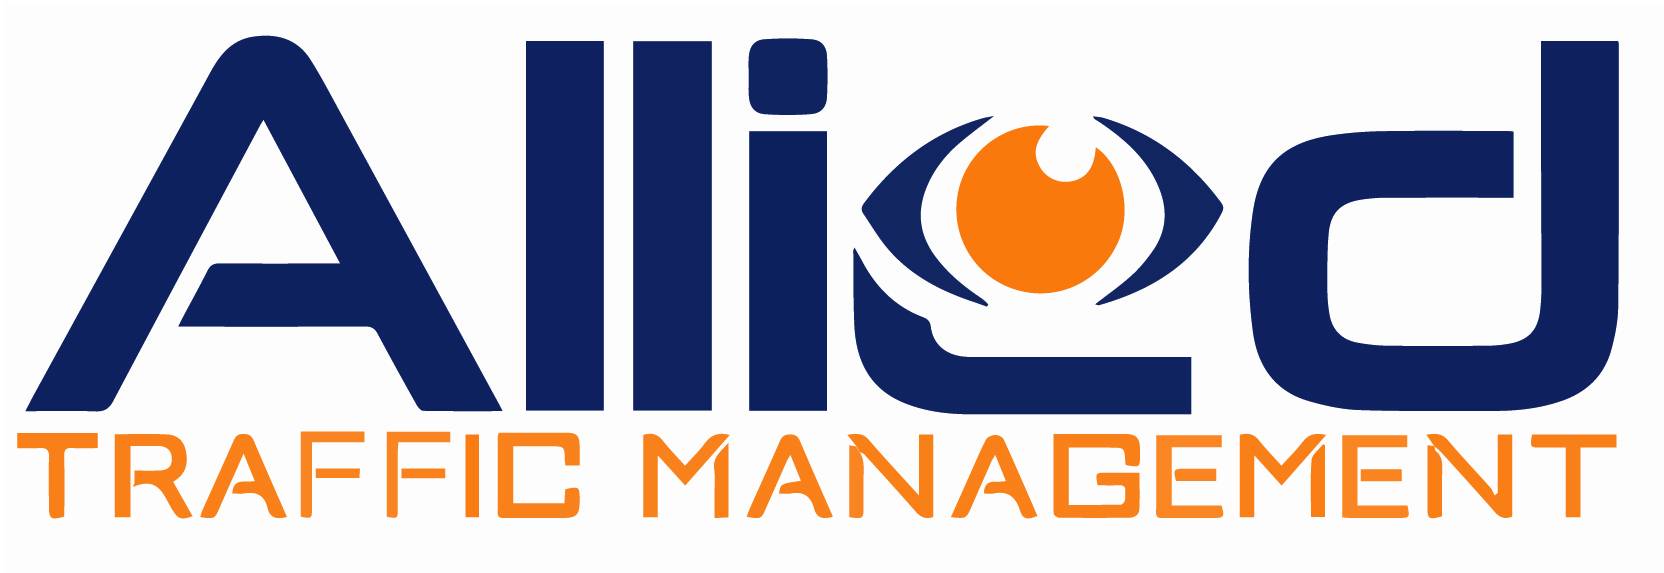 Allied Traffic Management Logo 100